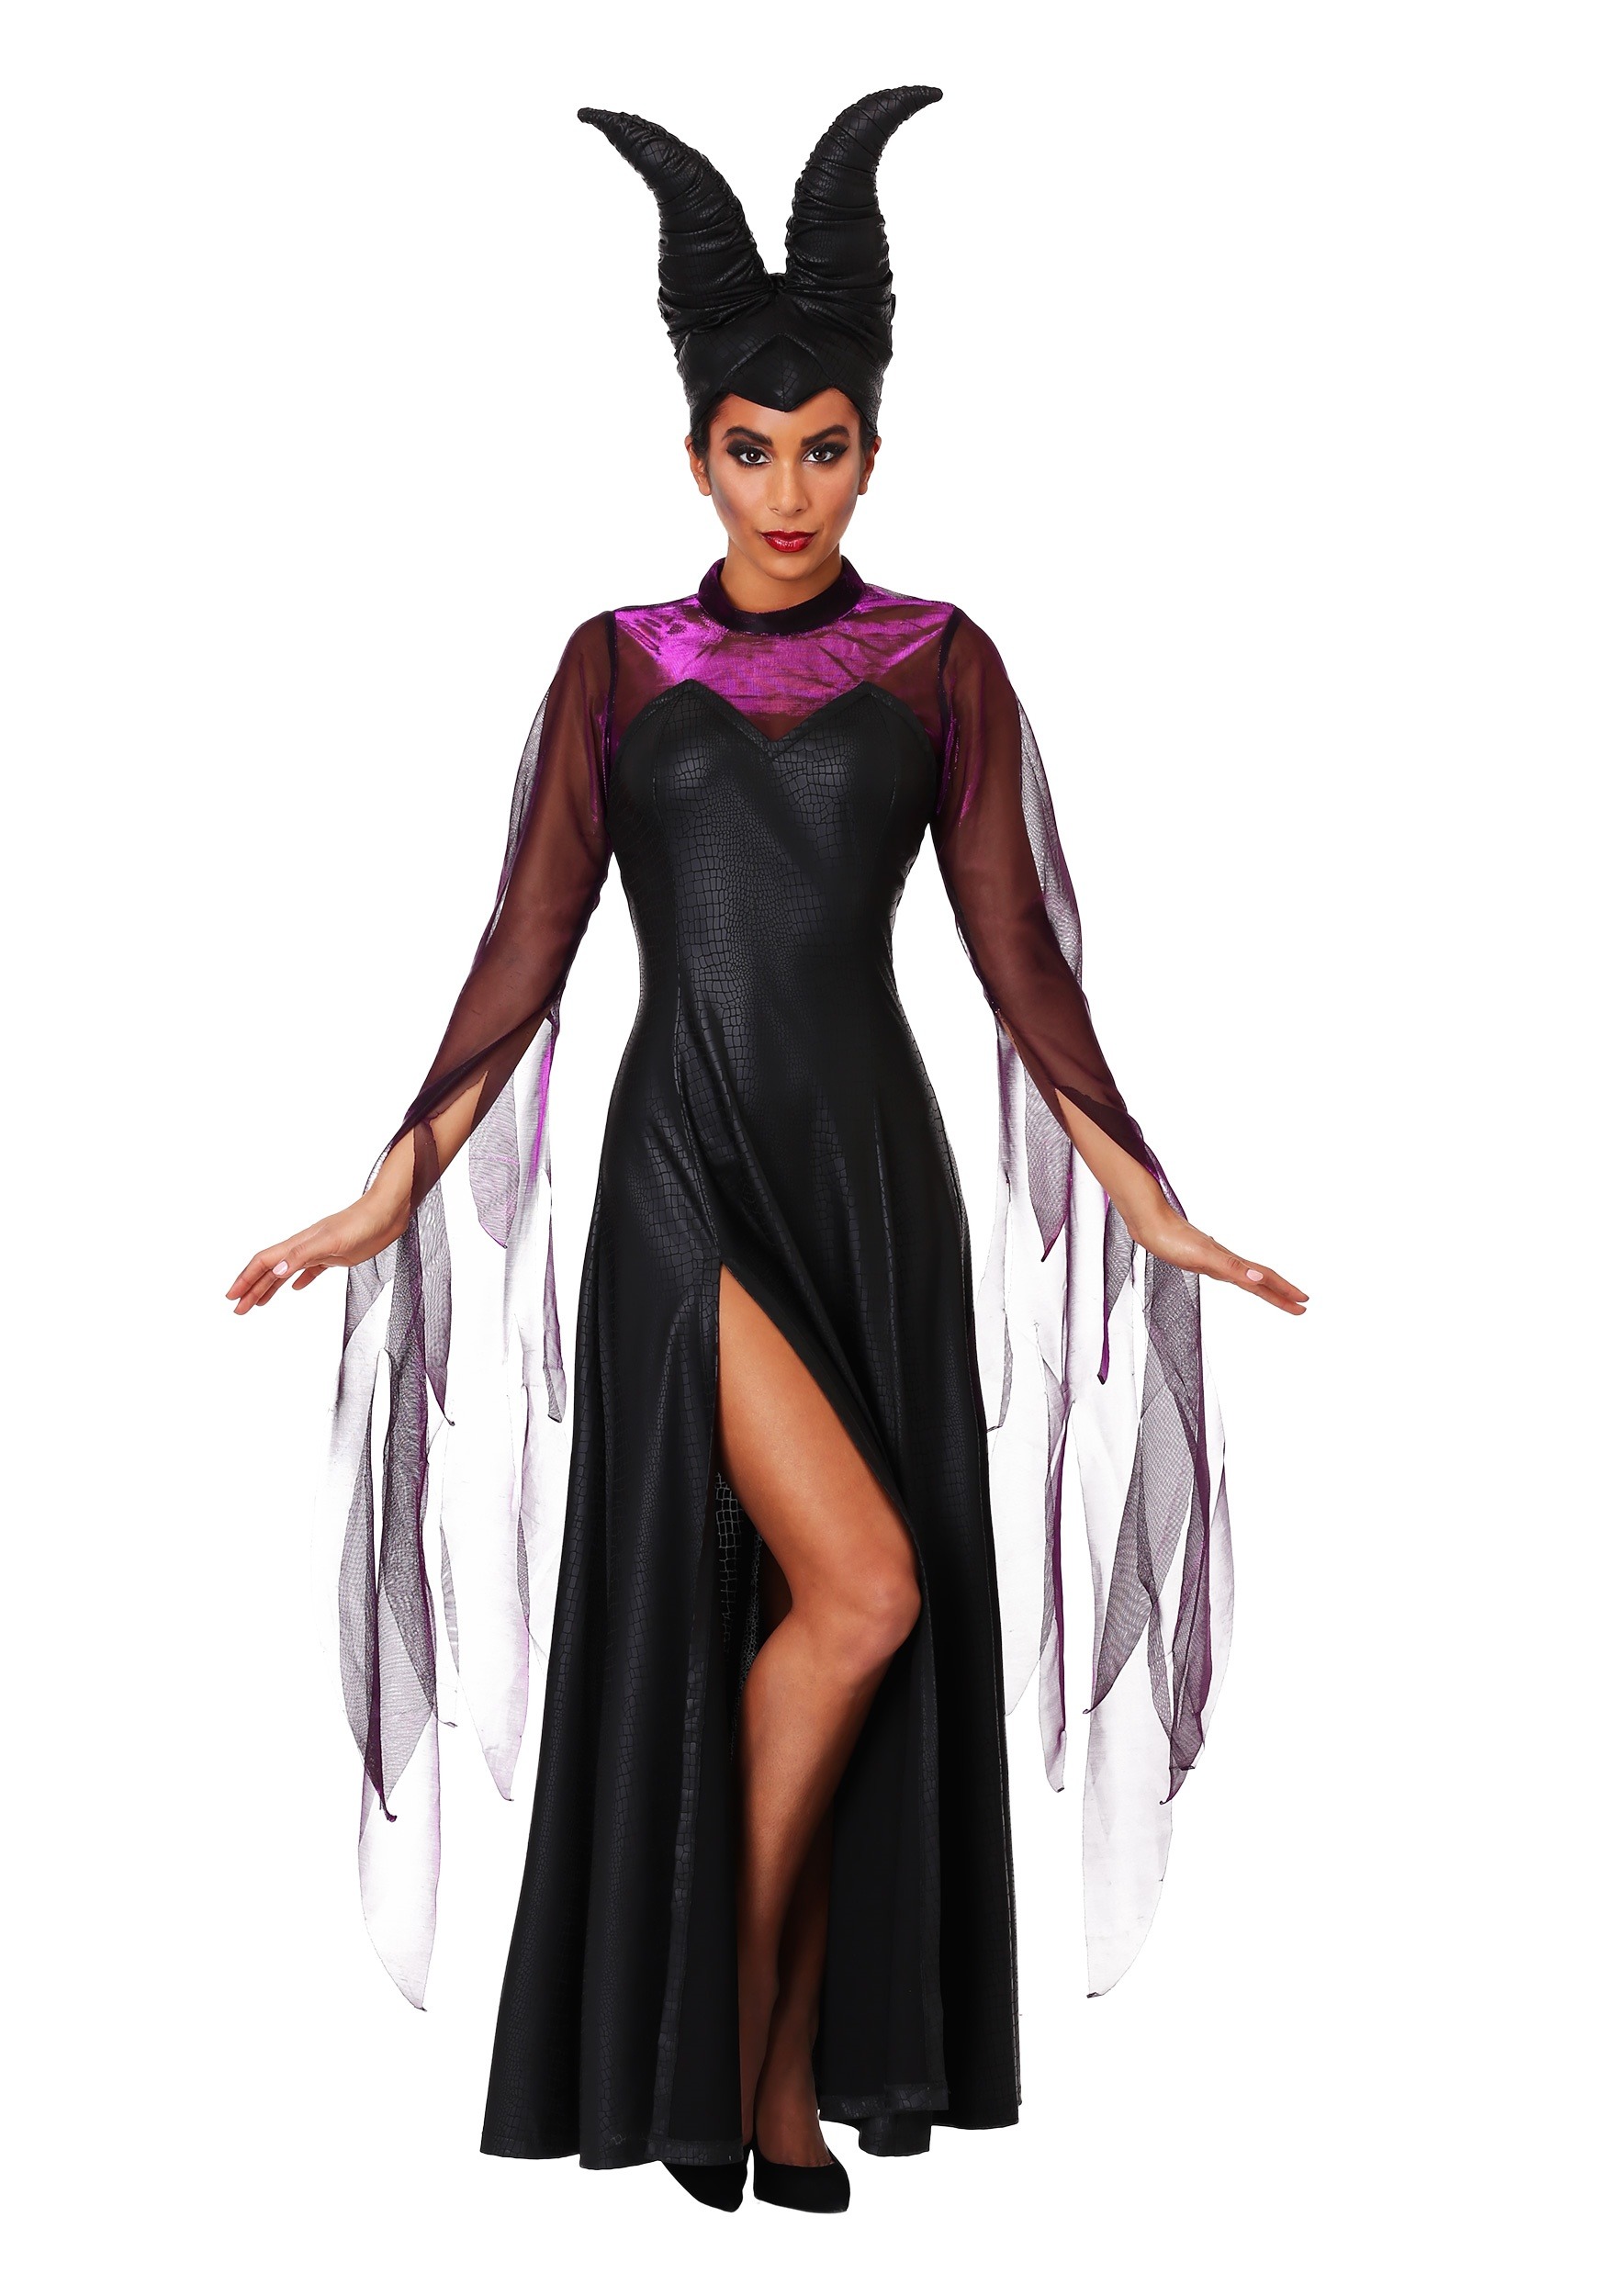 Photos - Fancy Dress Fancy FUN Costumes Malicious Queen Women's  Dress Costume Black/Purple 